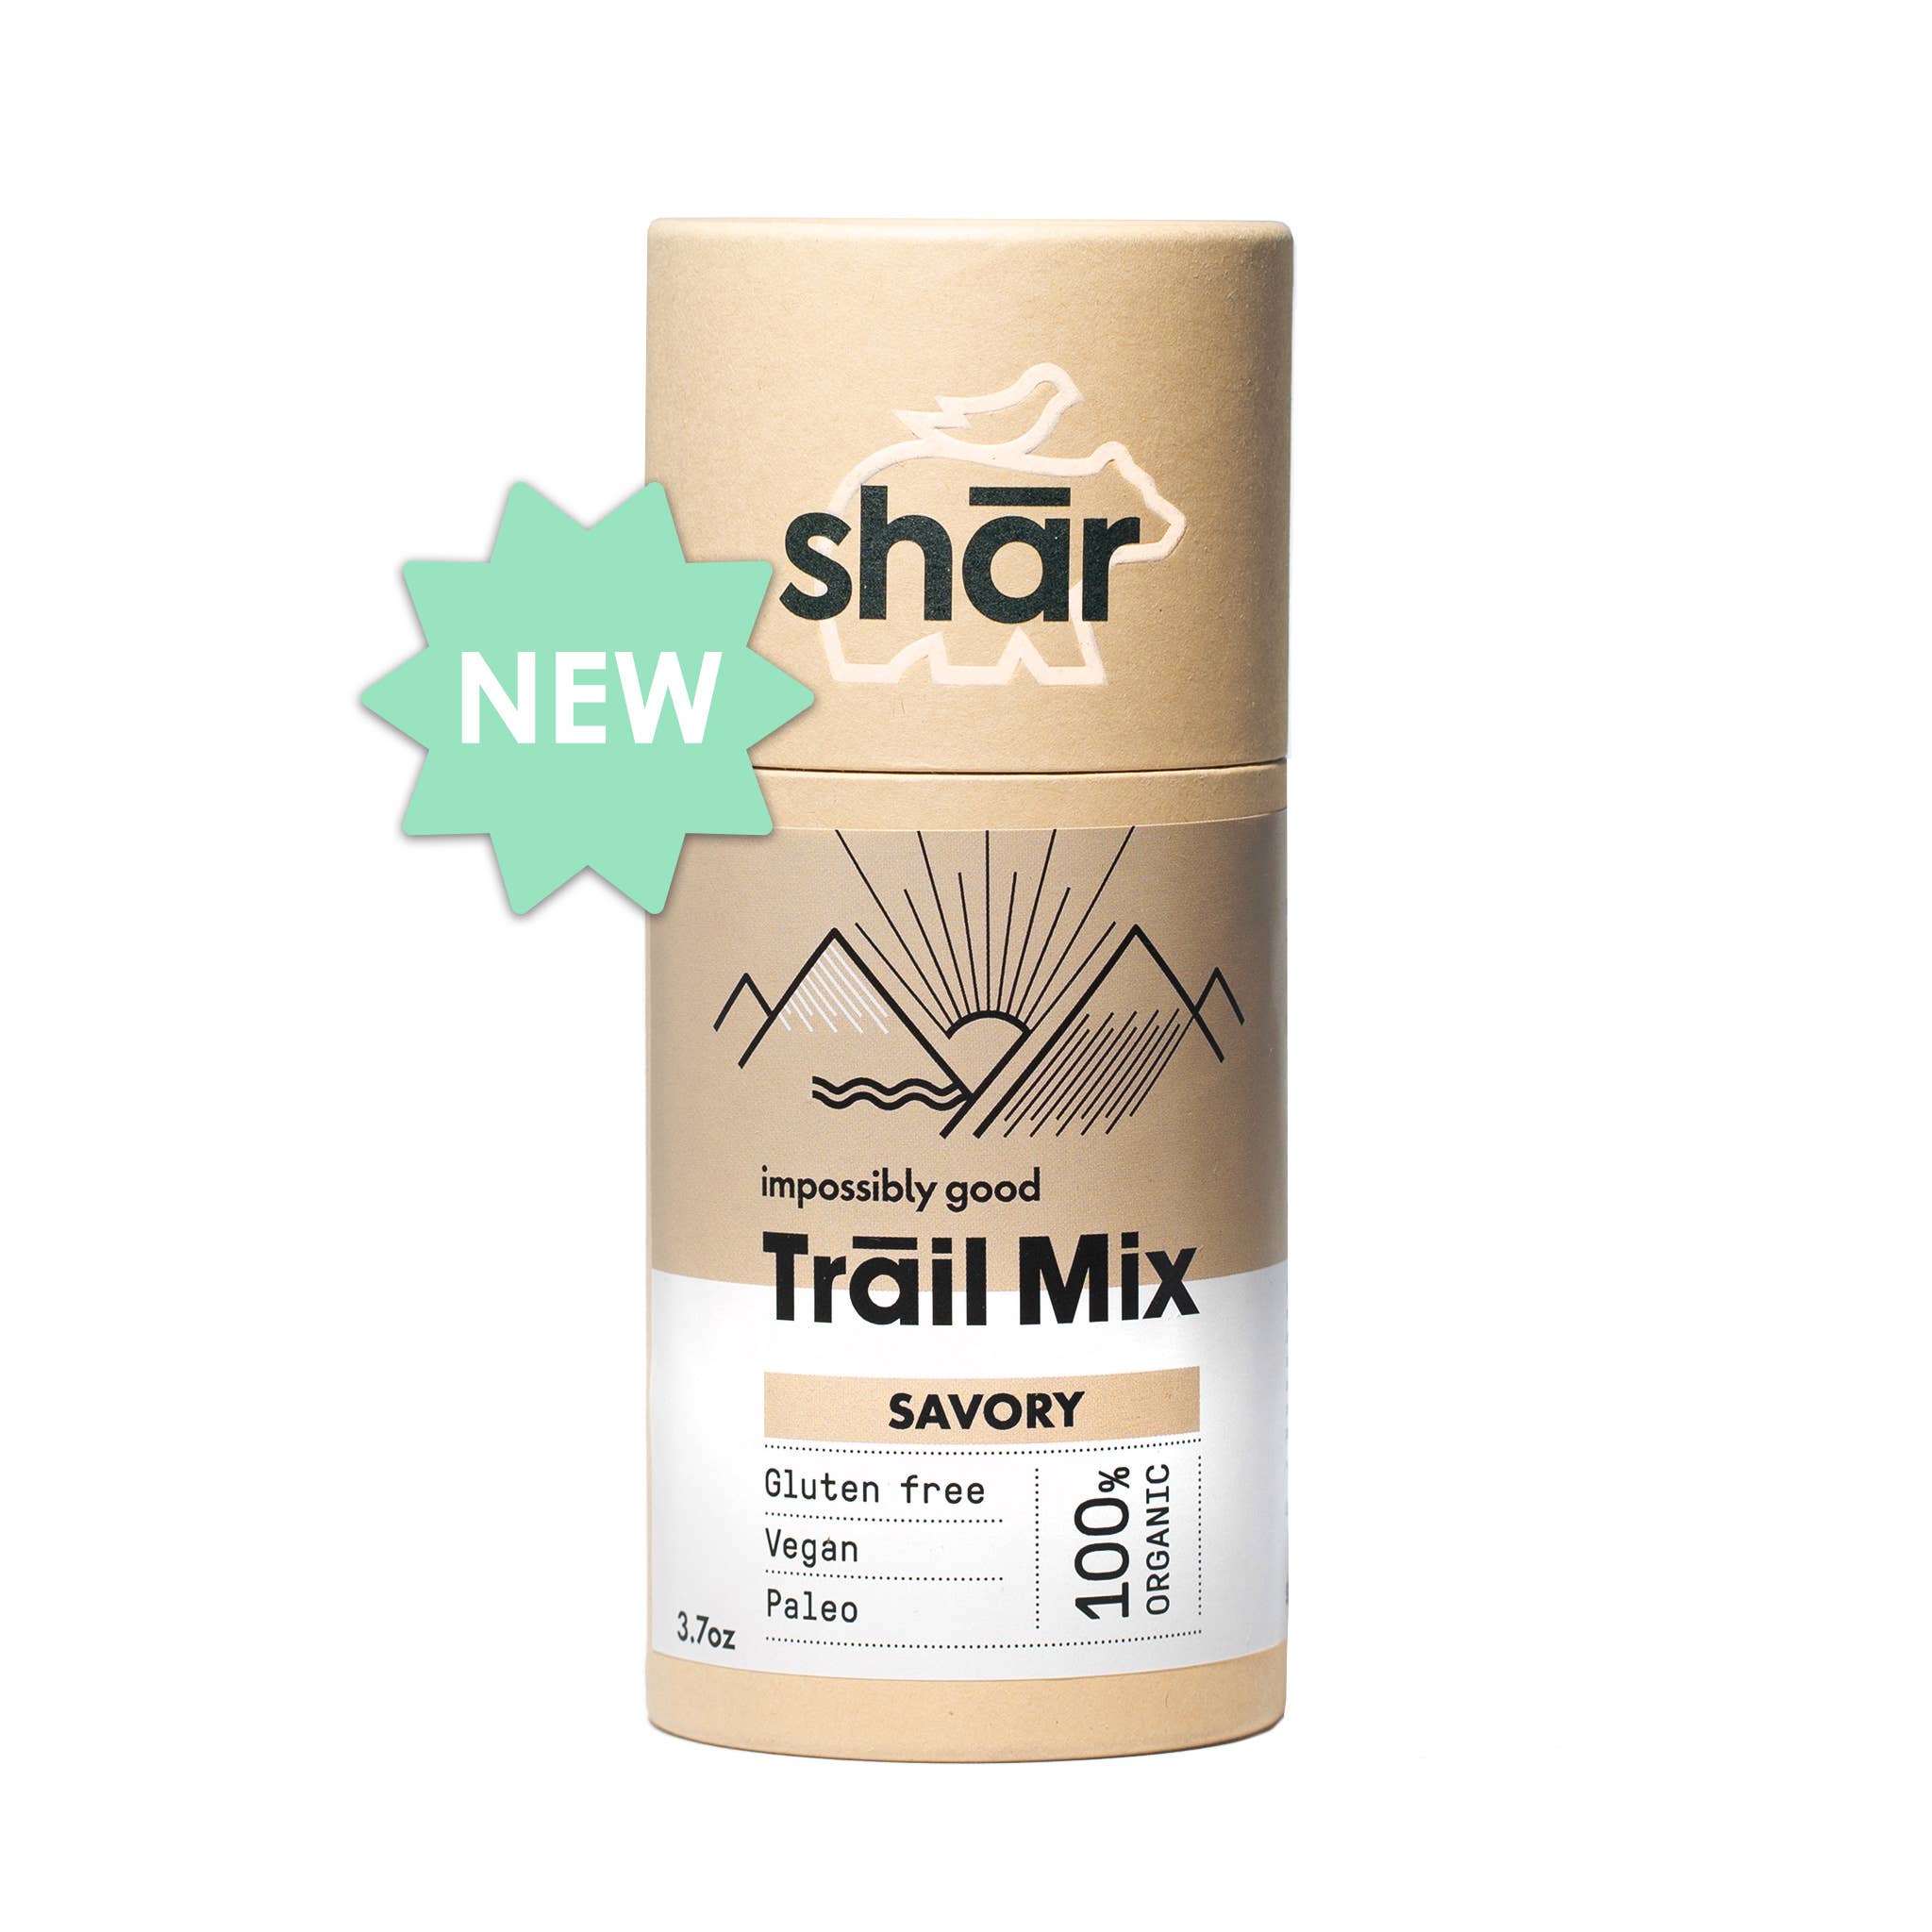 Shār Trail Mix - original  and savory flavors